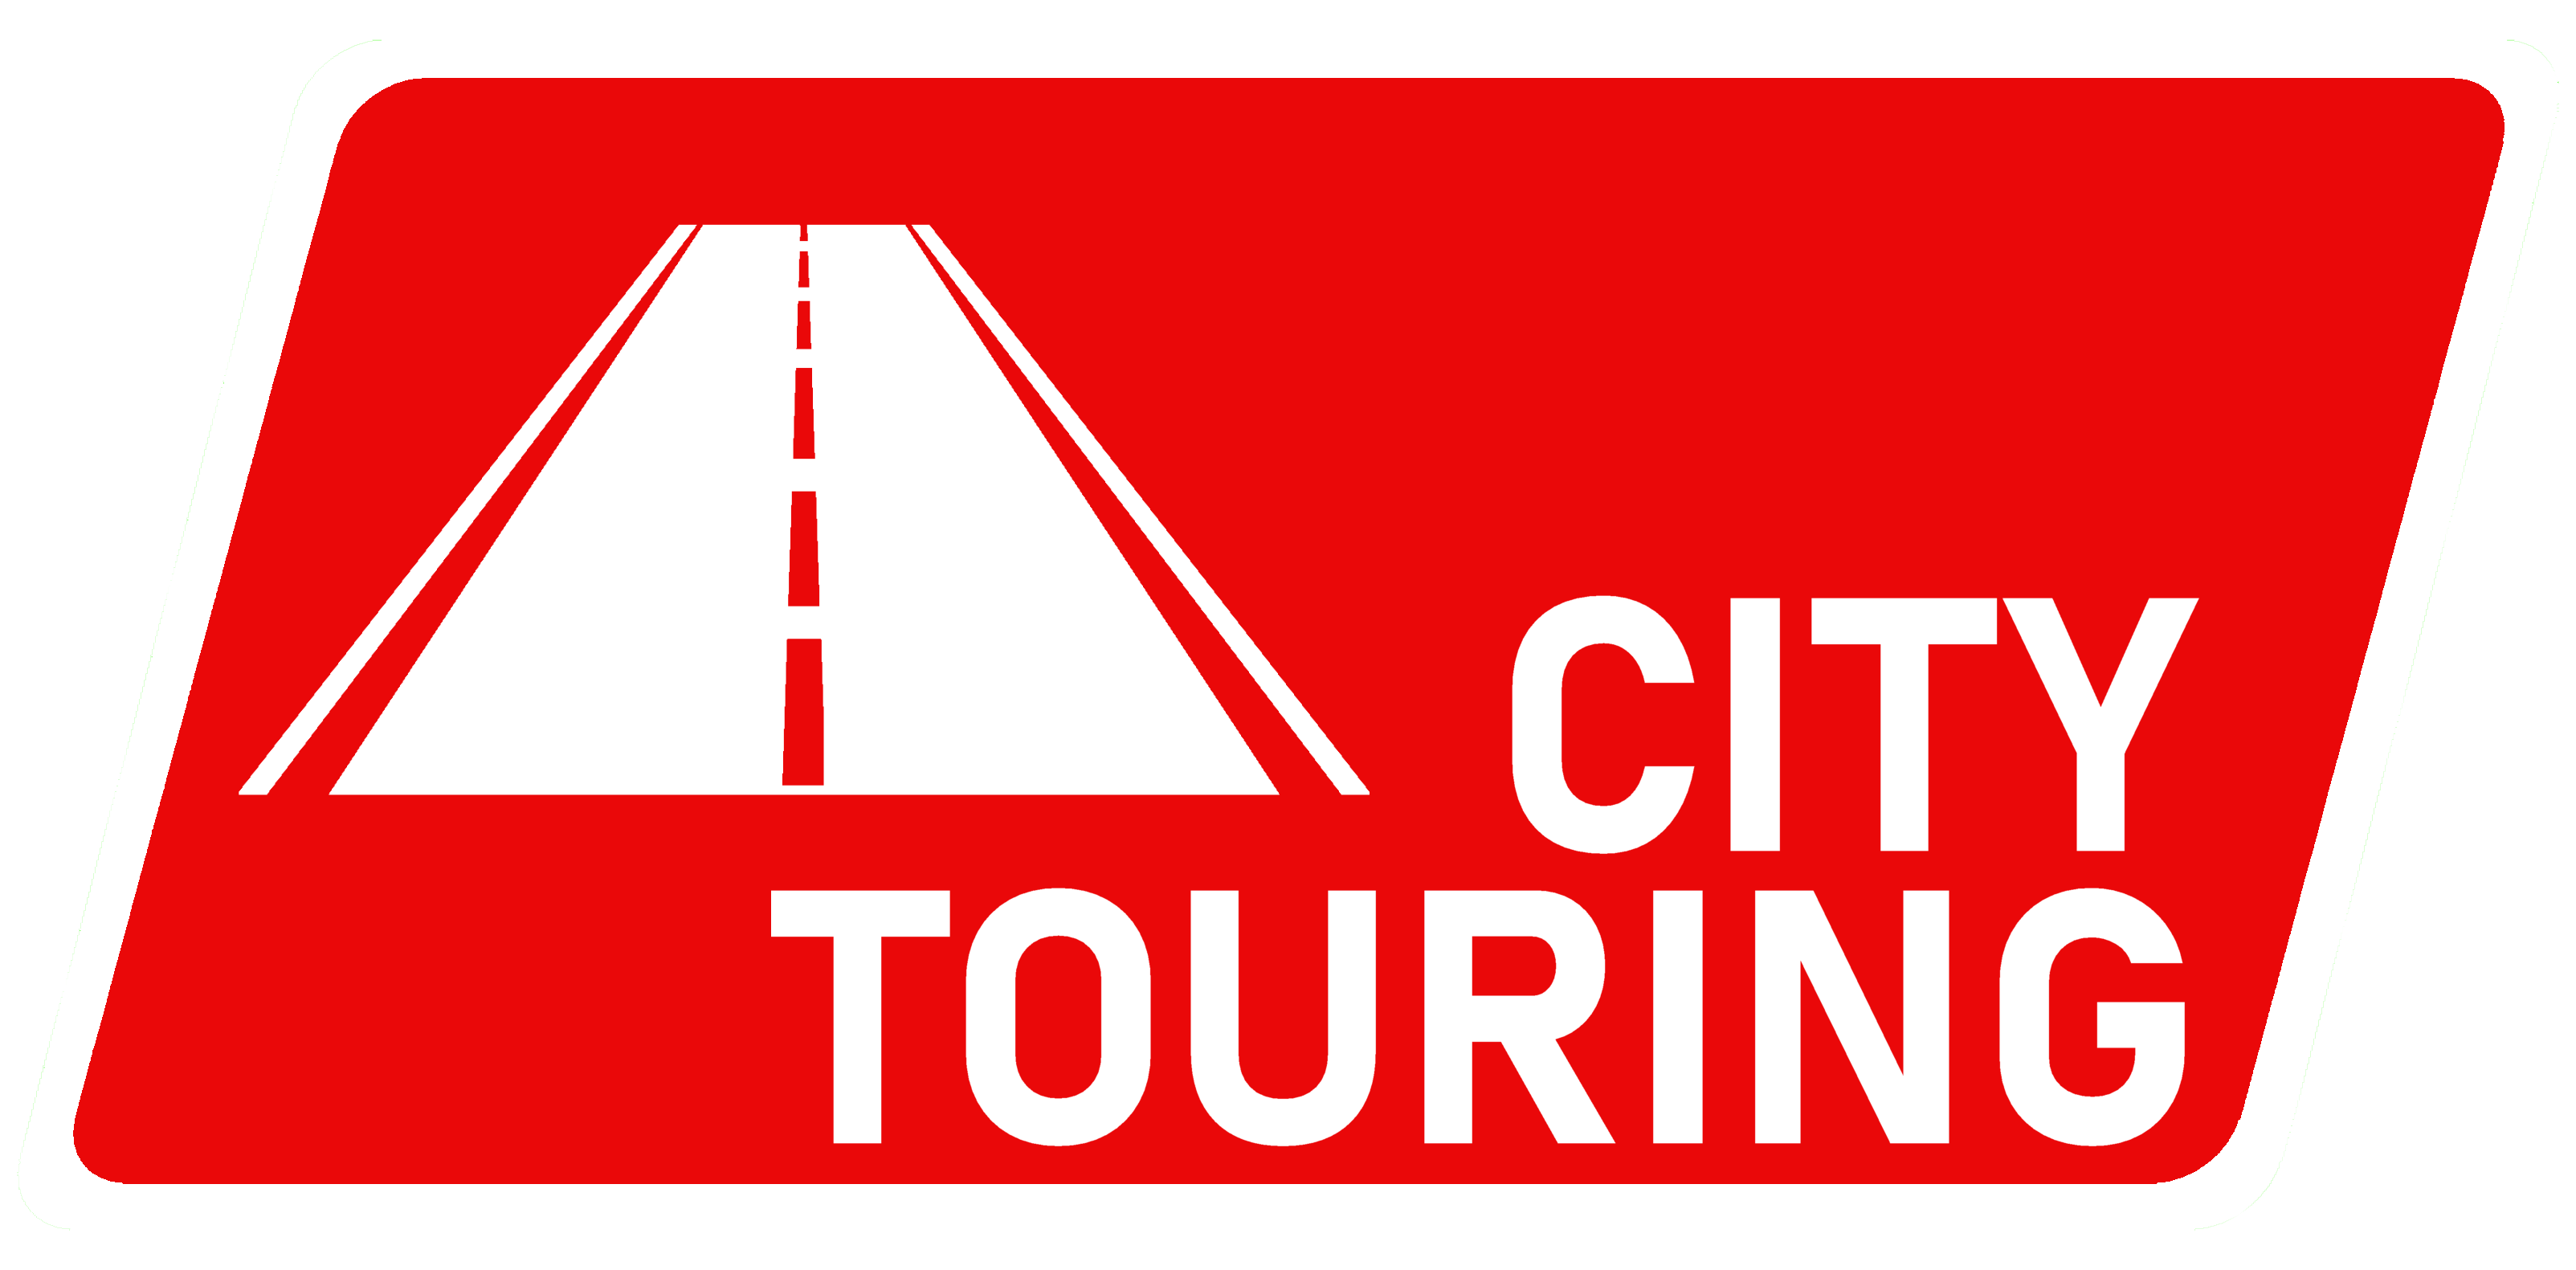 CITY TOURING